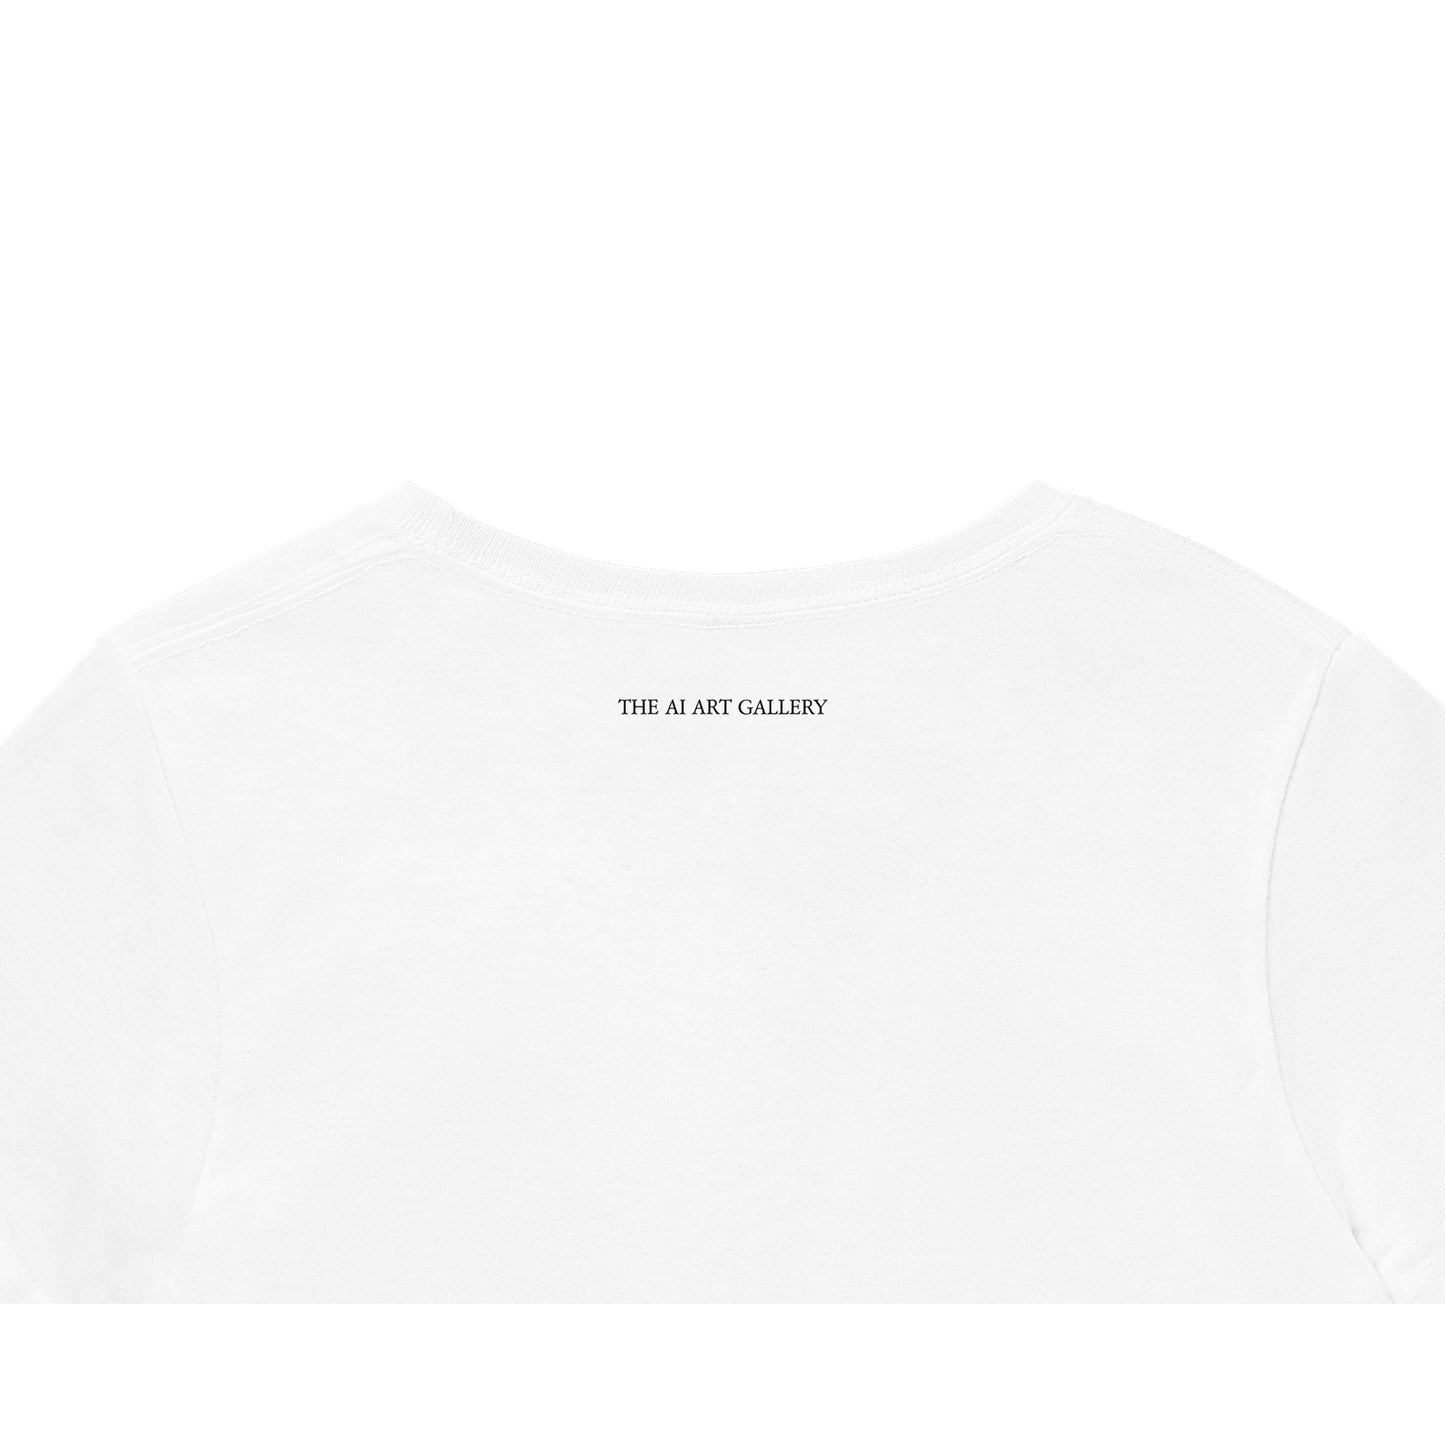 duobus coloribus / SS23 / T-shirt / white